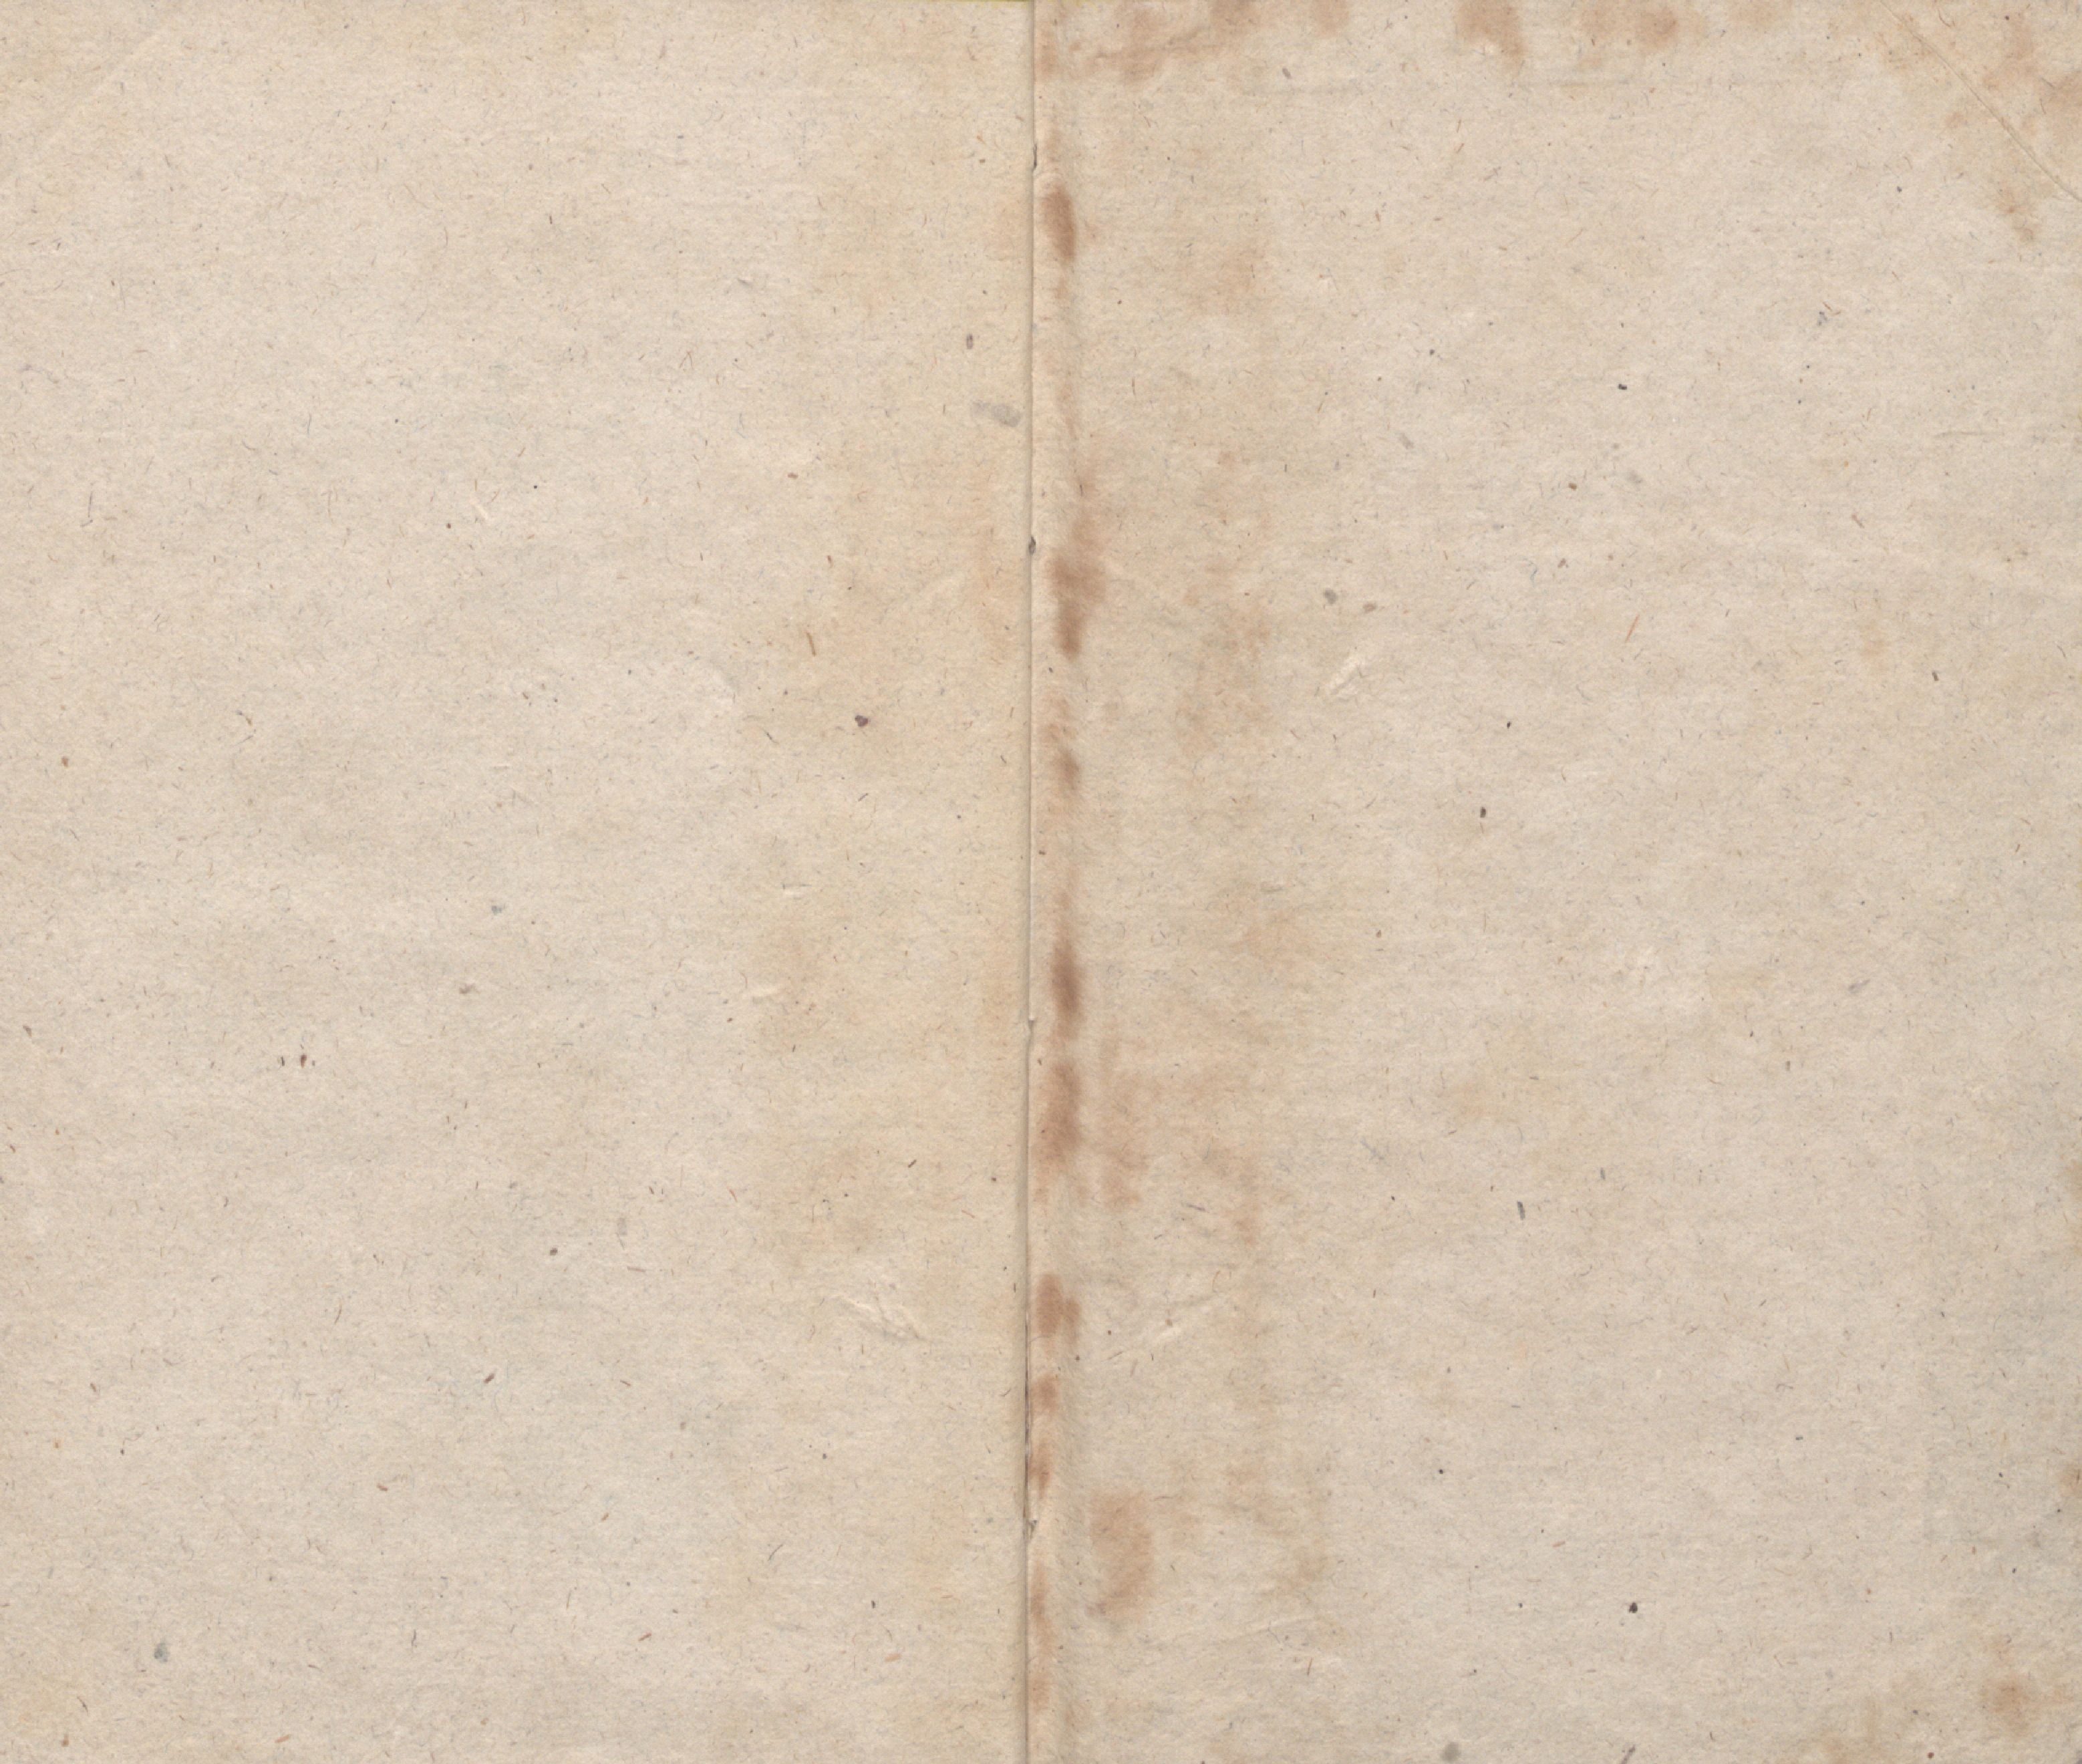 Lillikessed [1] (1814) | 12. hinteres Vorsatz